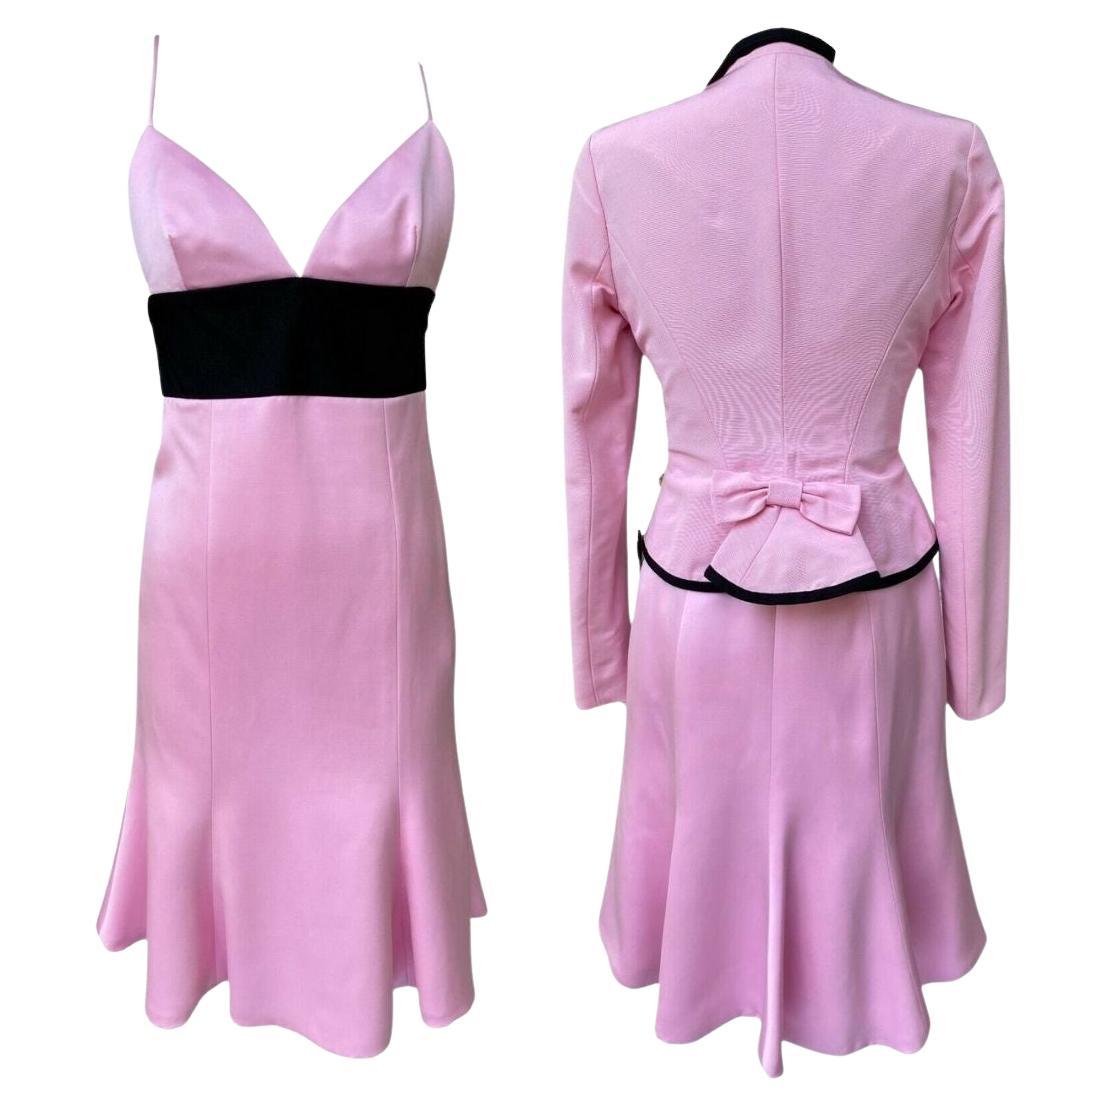 Ralph Lauren Collection Purple Label Pink Ascot Dress & Jacket S/S 2008 Sz 4